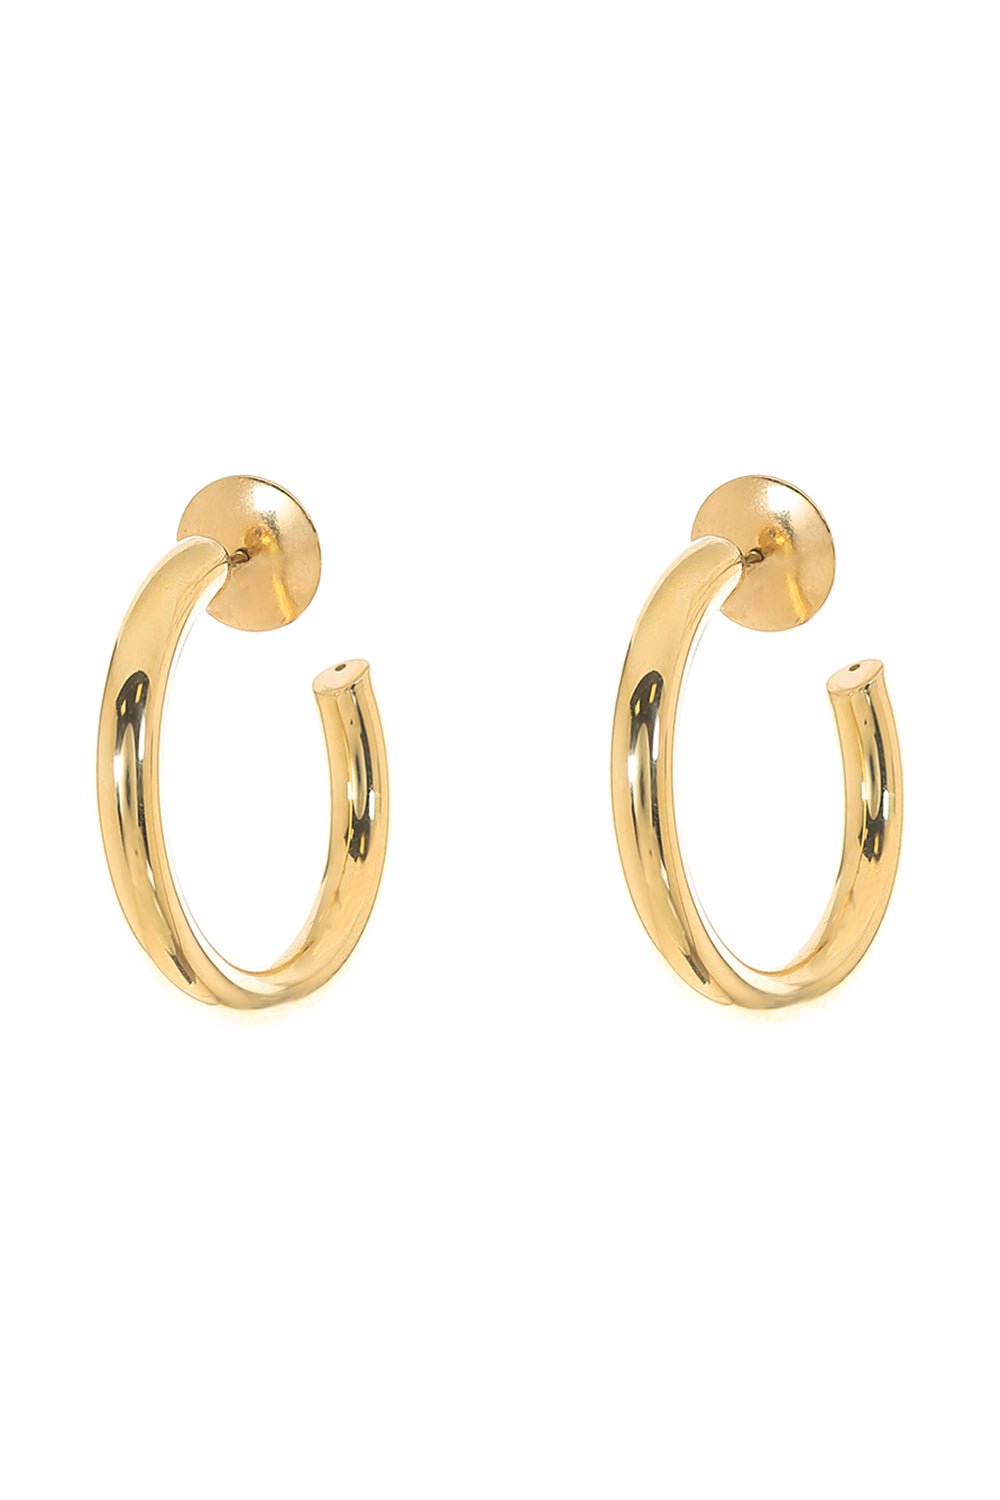 SIDNEY GARBER-Mallory Hoop Earrings - 2.9cm-YELLOW GOLD